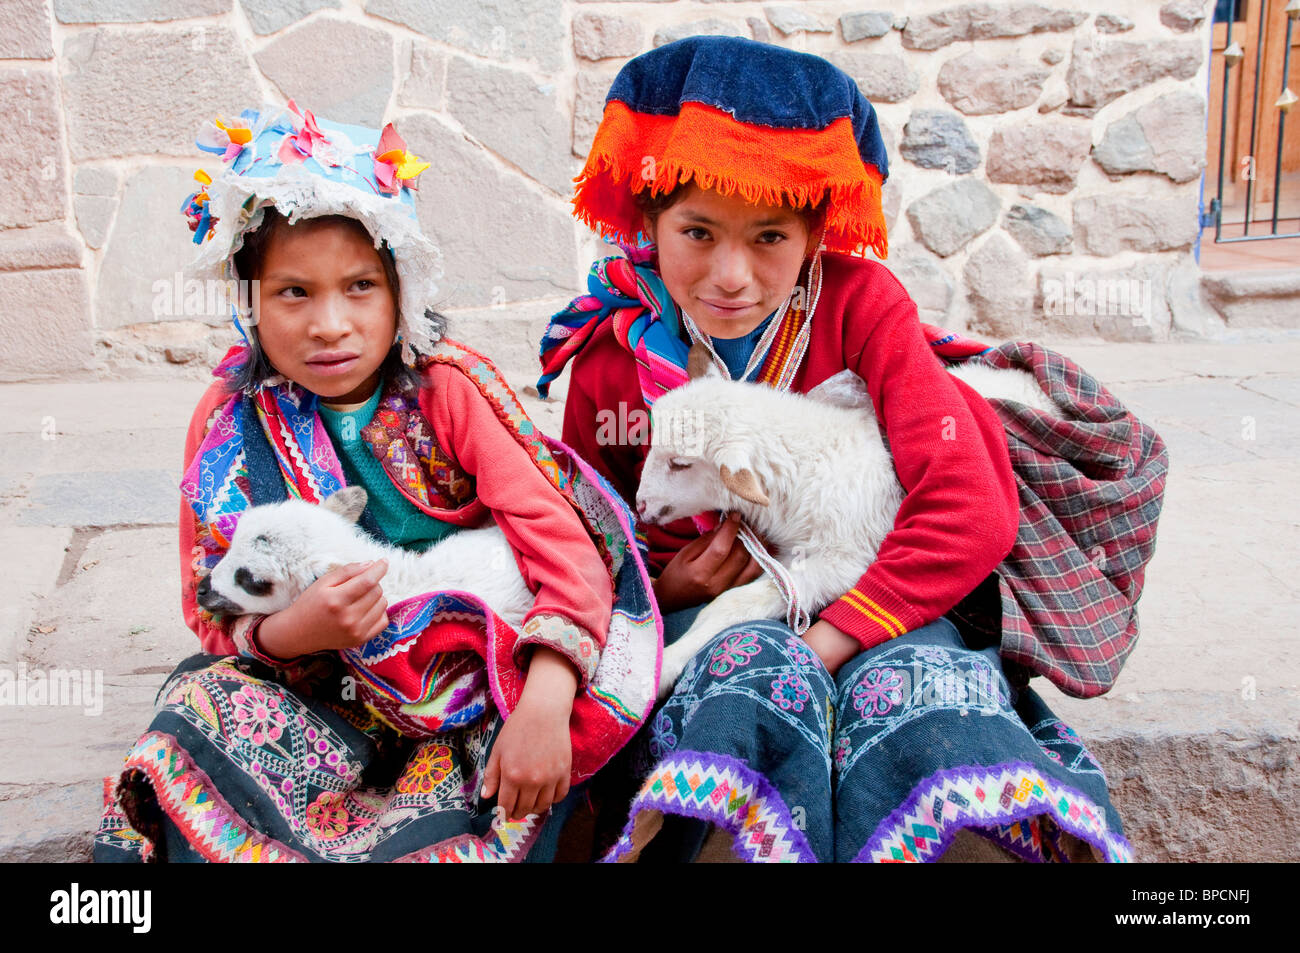 Peruvians in traditional dress in Pisac, Urubamba Valley, Peru, South America. Stock Photo